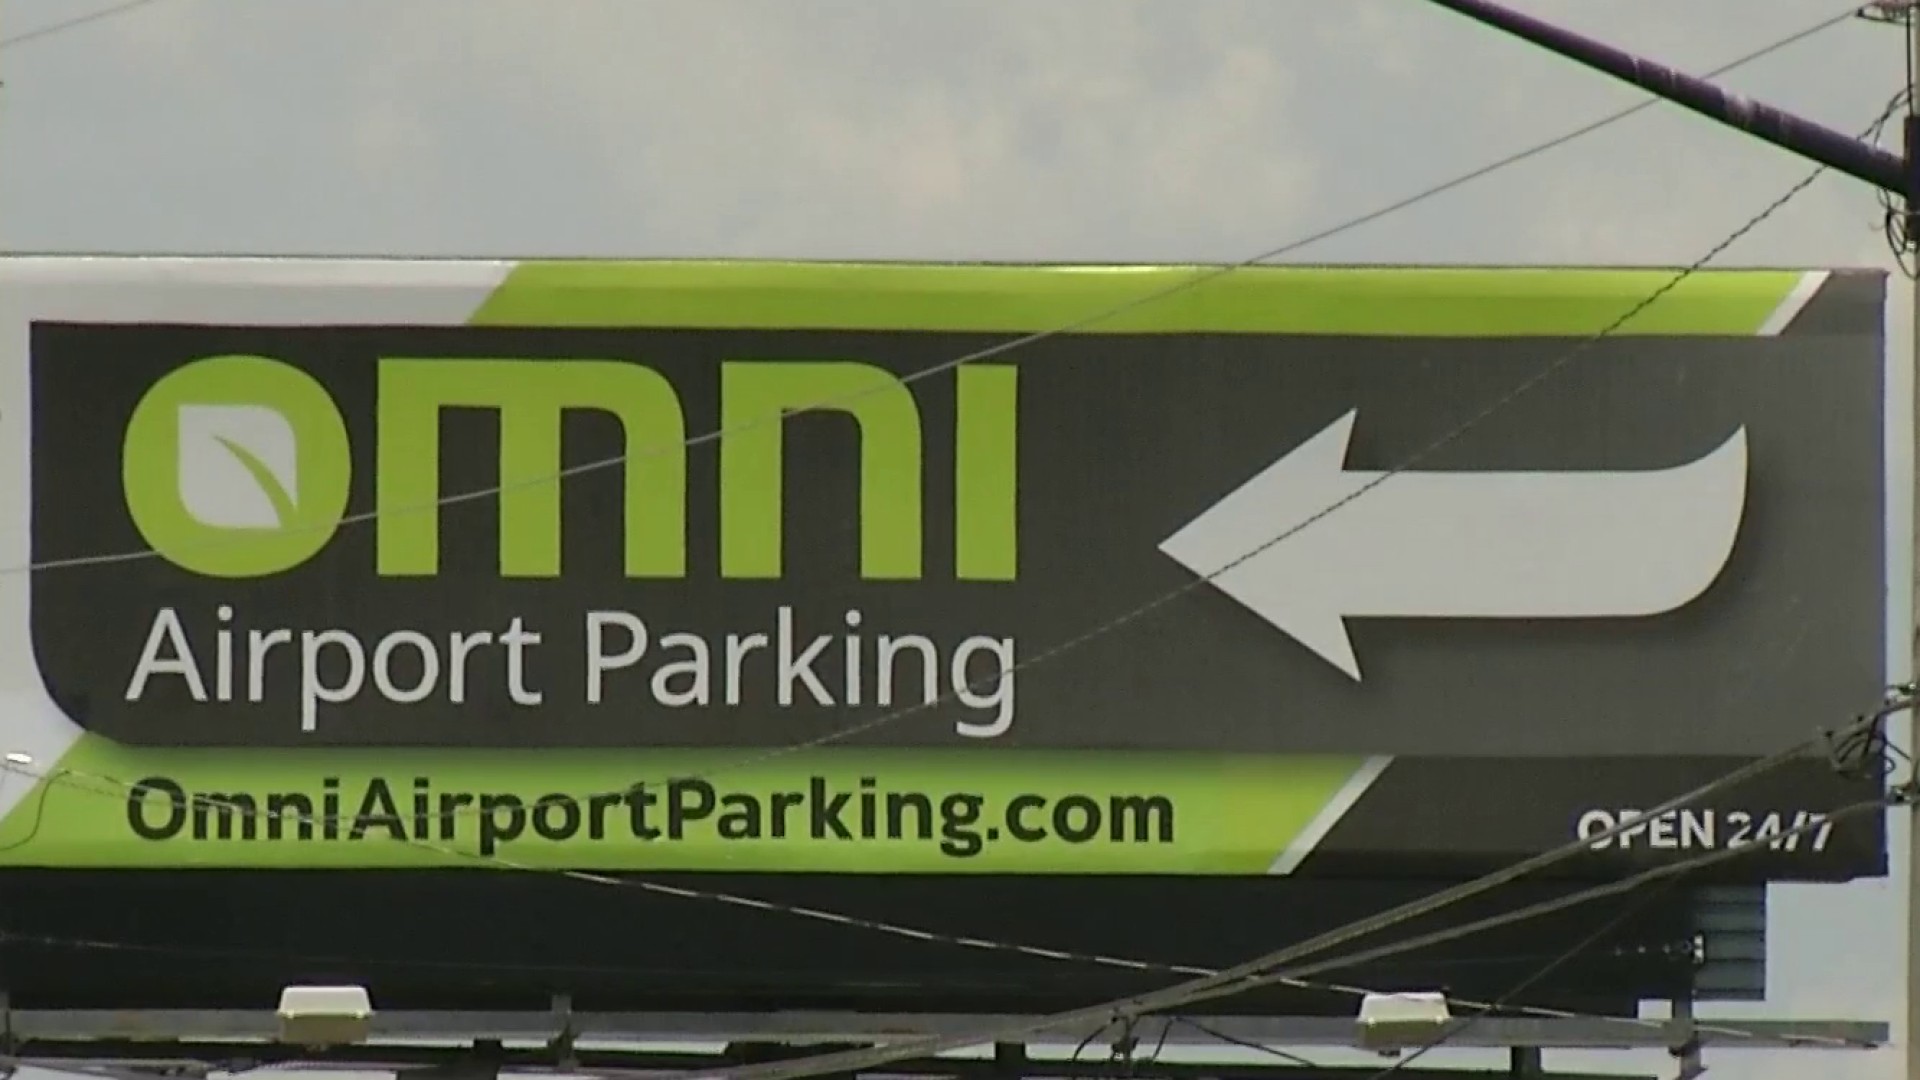 OMNI Airport Parking - VALET